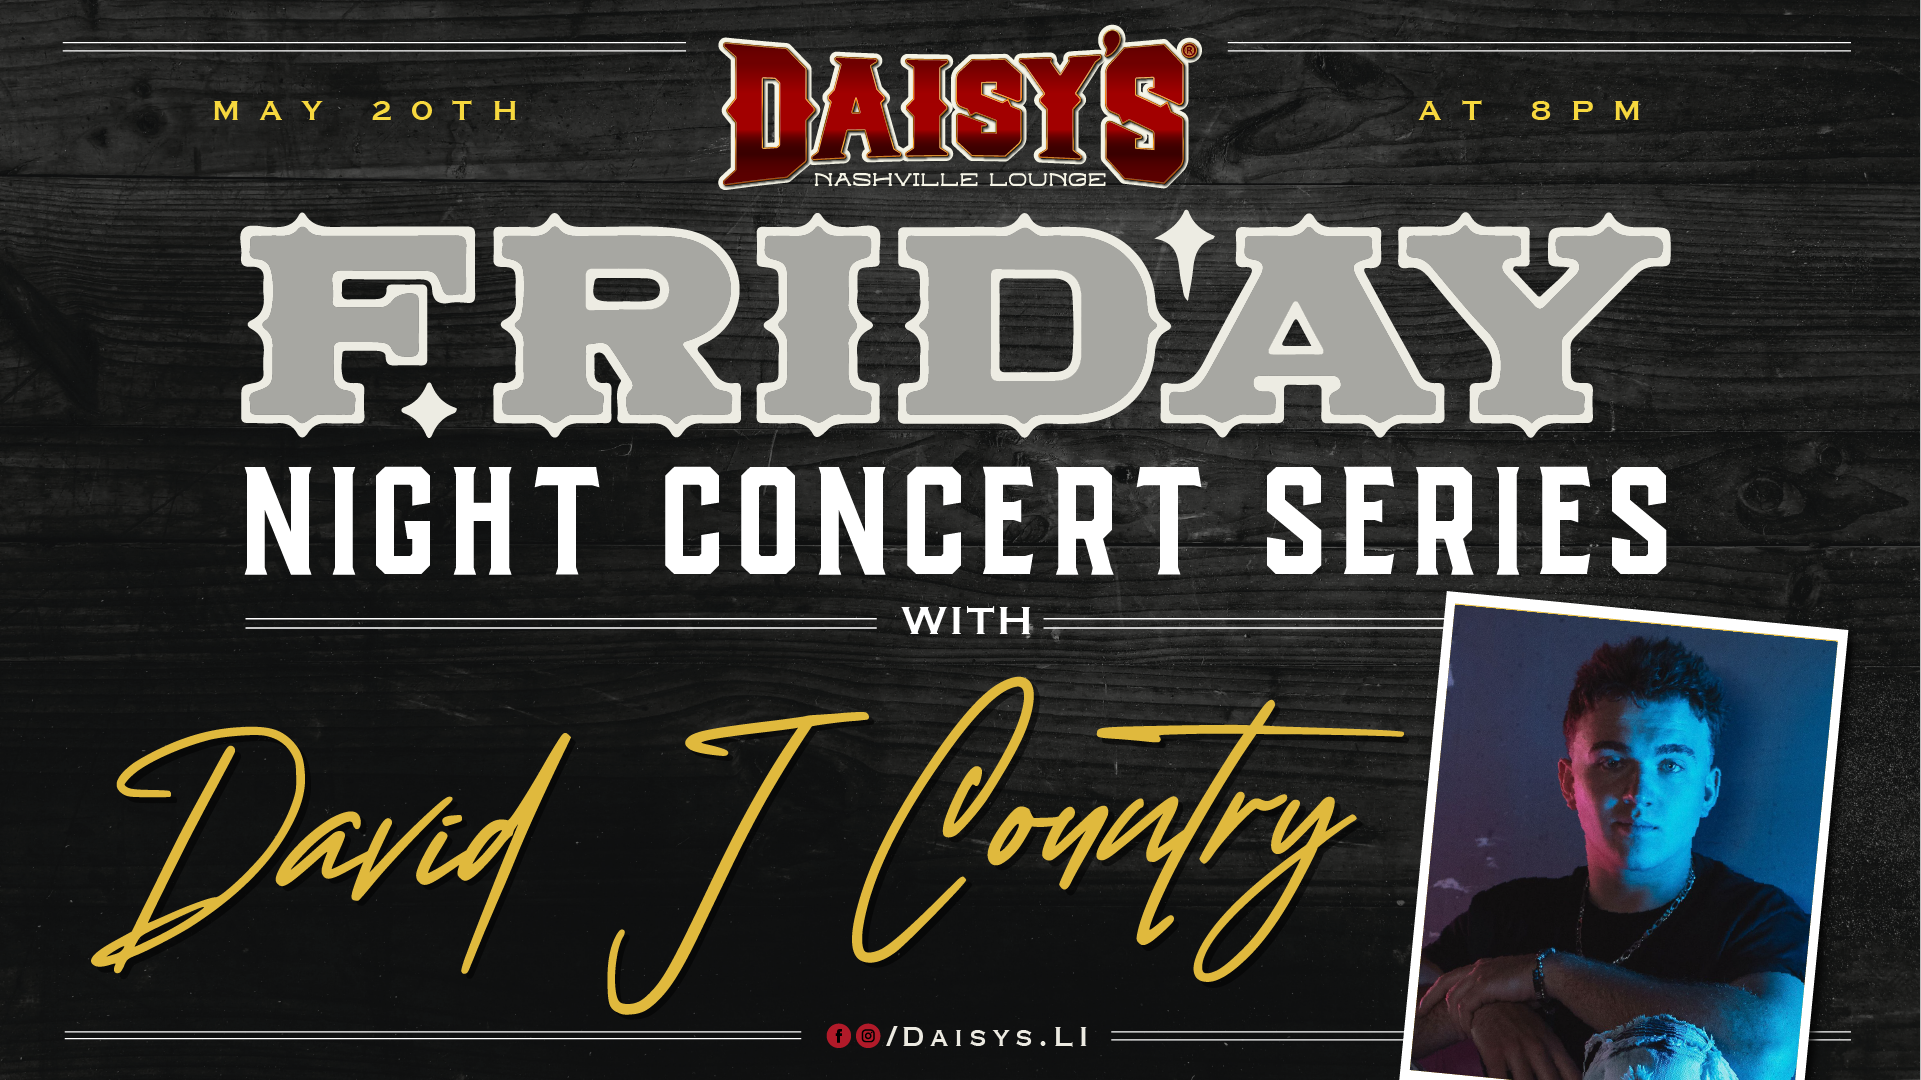 Friday Night Concert Series: David J Country May 20th 8 pm